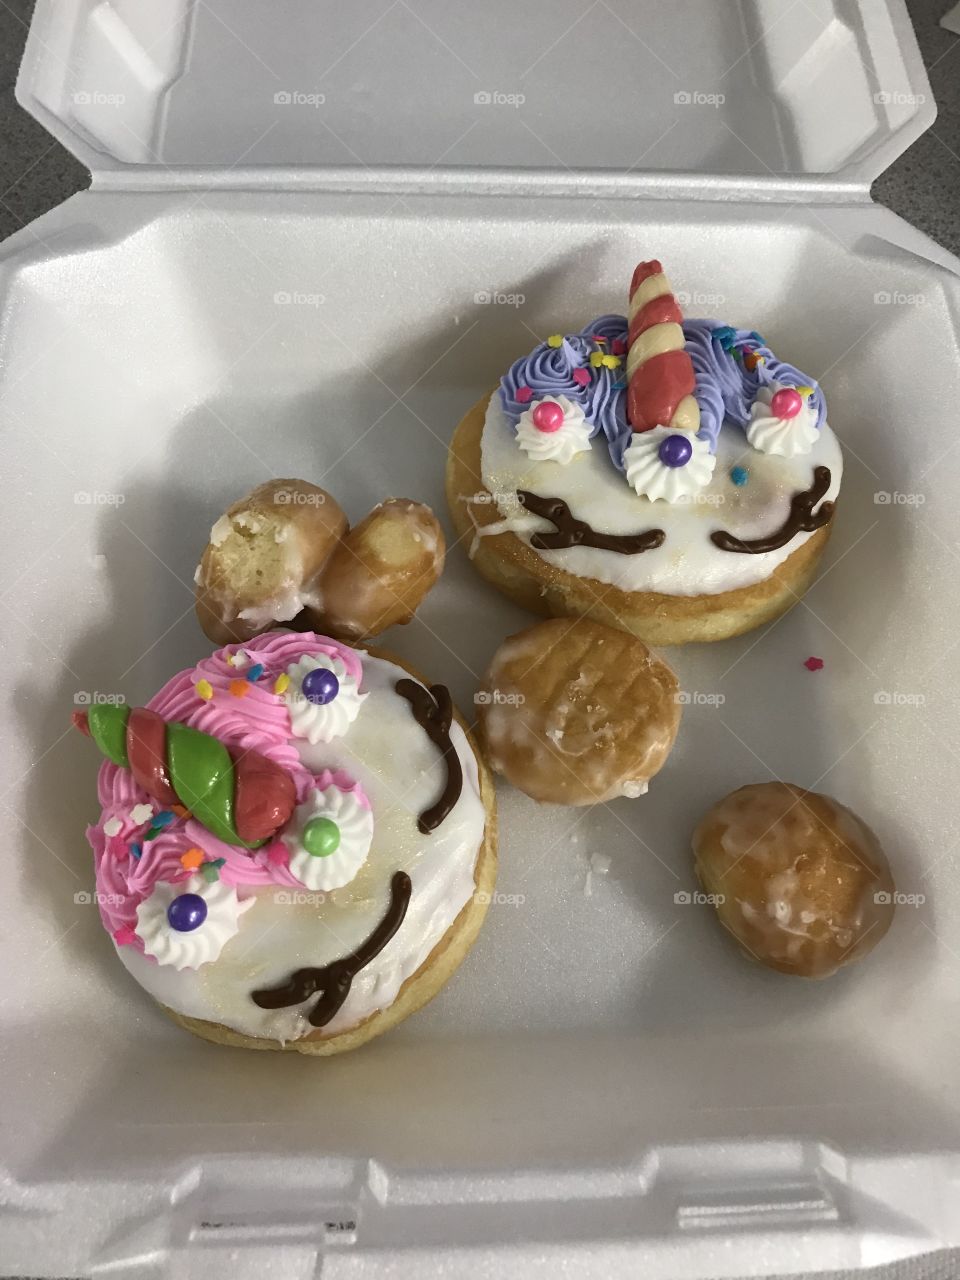 Crazy donuts